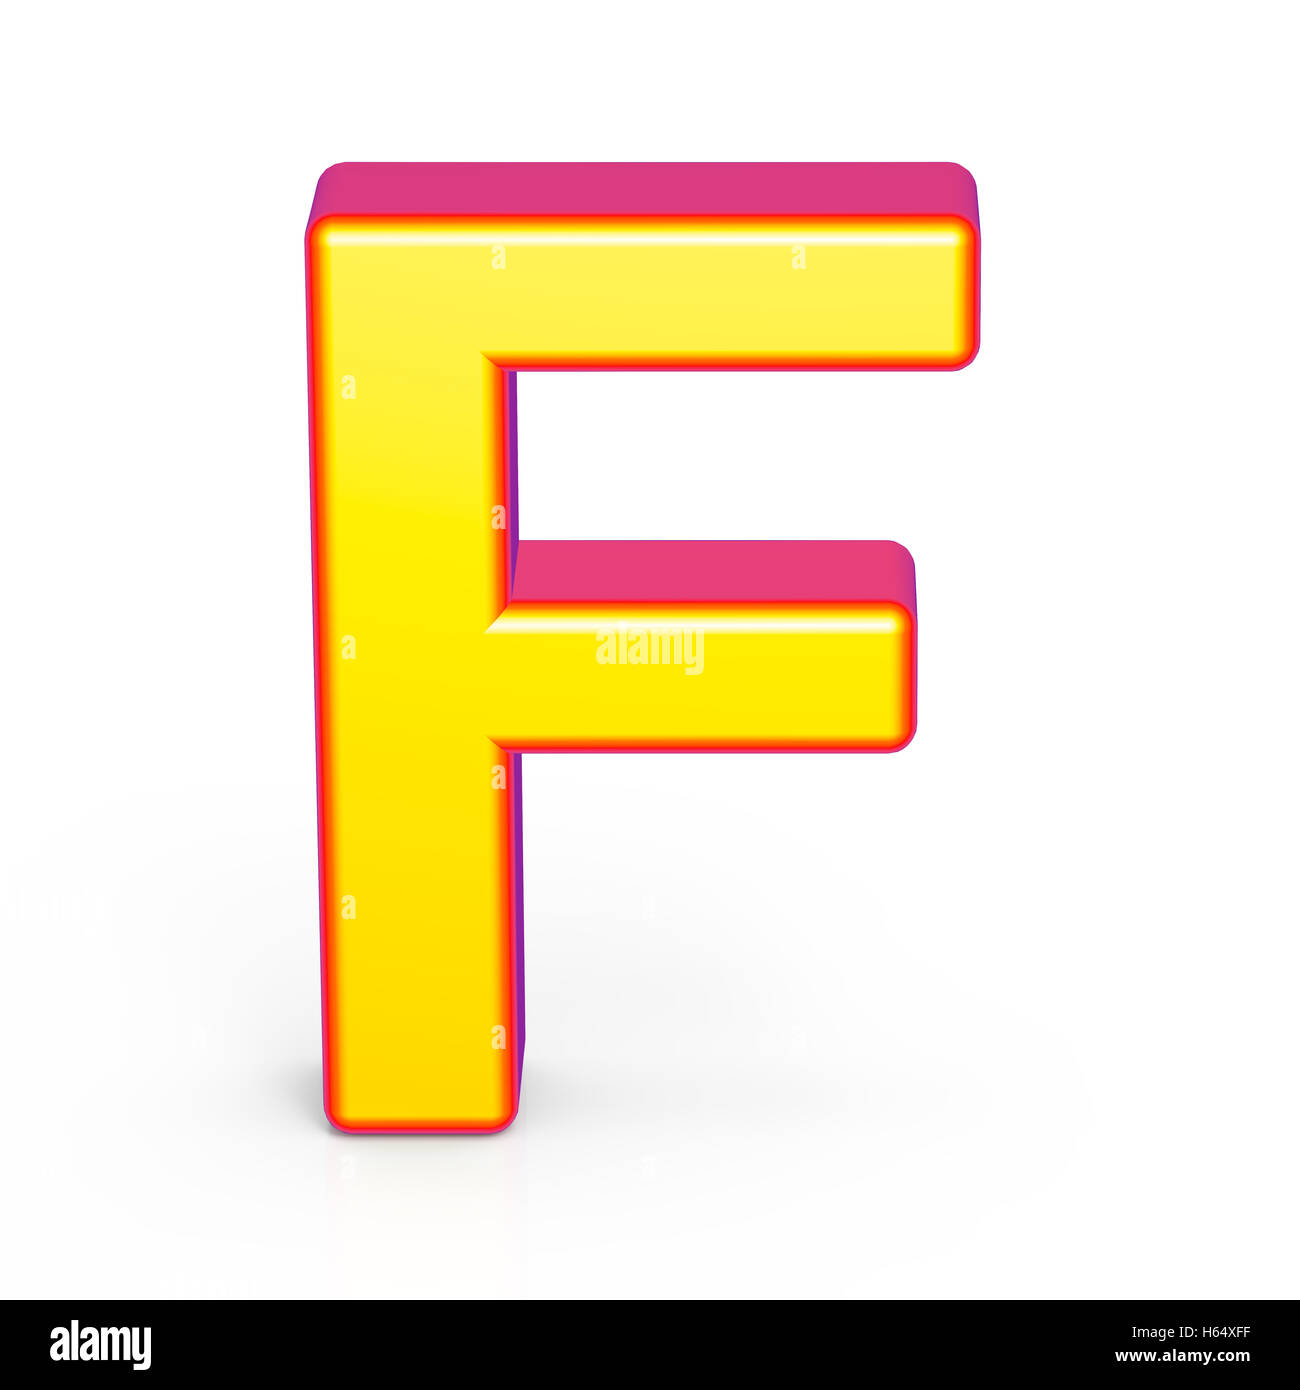 3d rendering golden letter F isolated on white background, 3d illustration Stock Photo